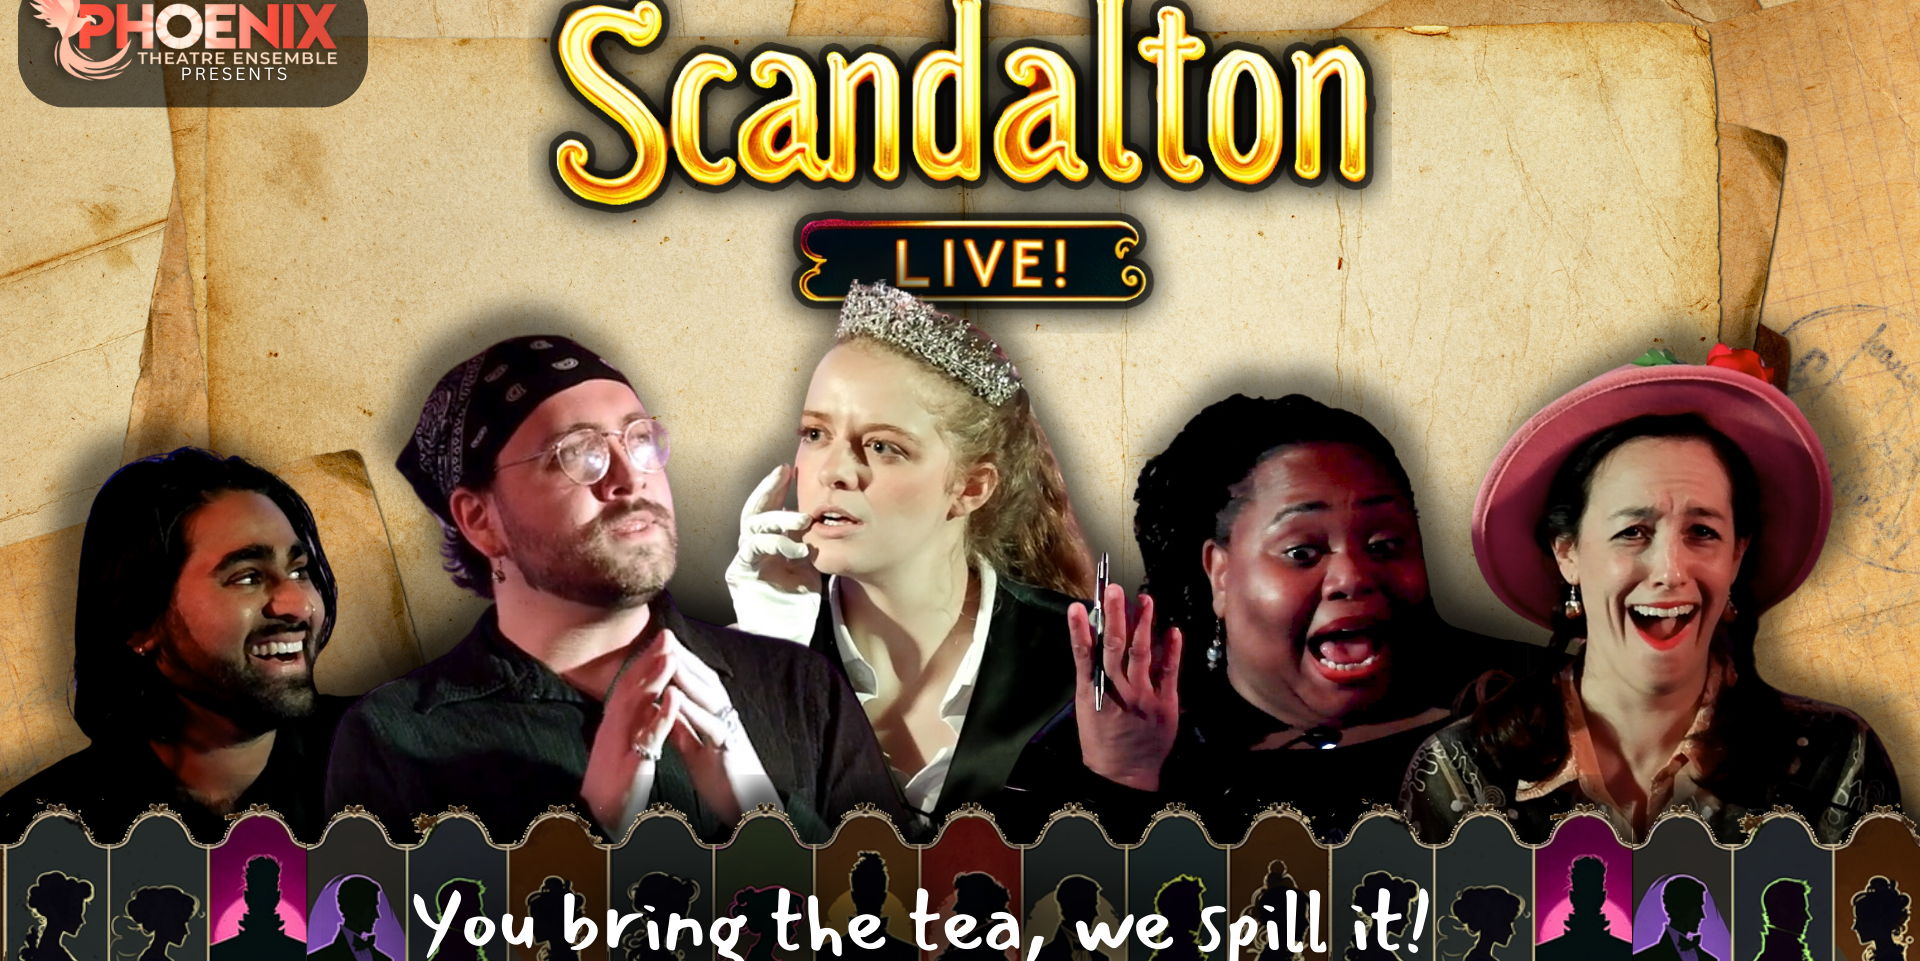 SCANDALTON LIVE! promotional image